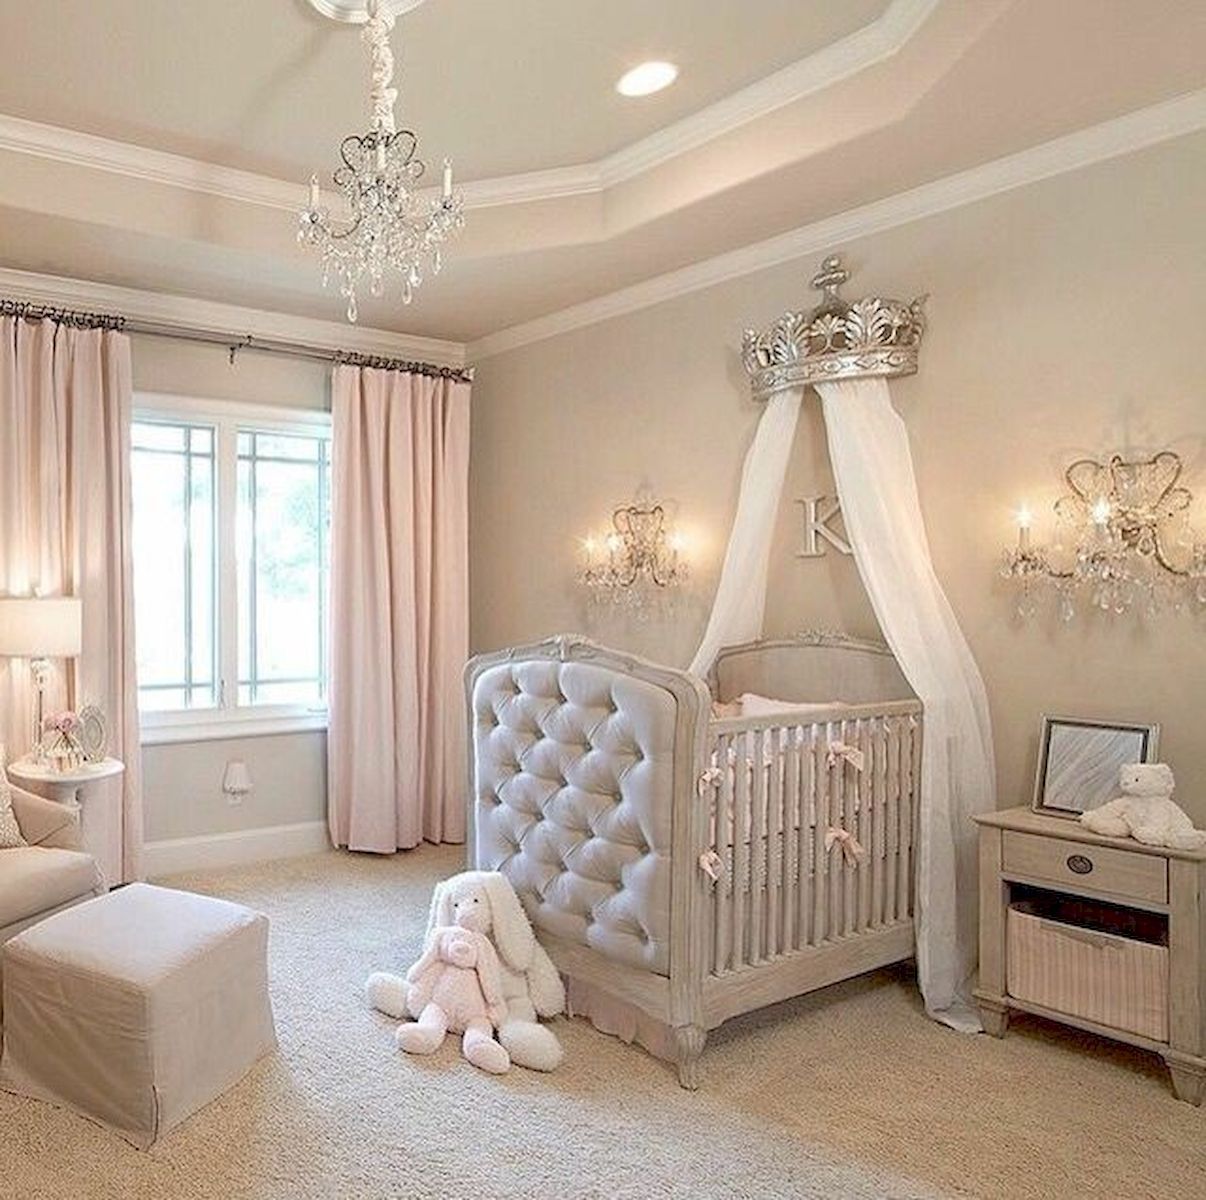 50 Cute Baby Nursery Ideas for Your Little Princes